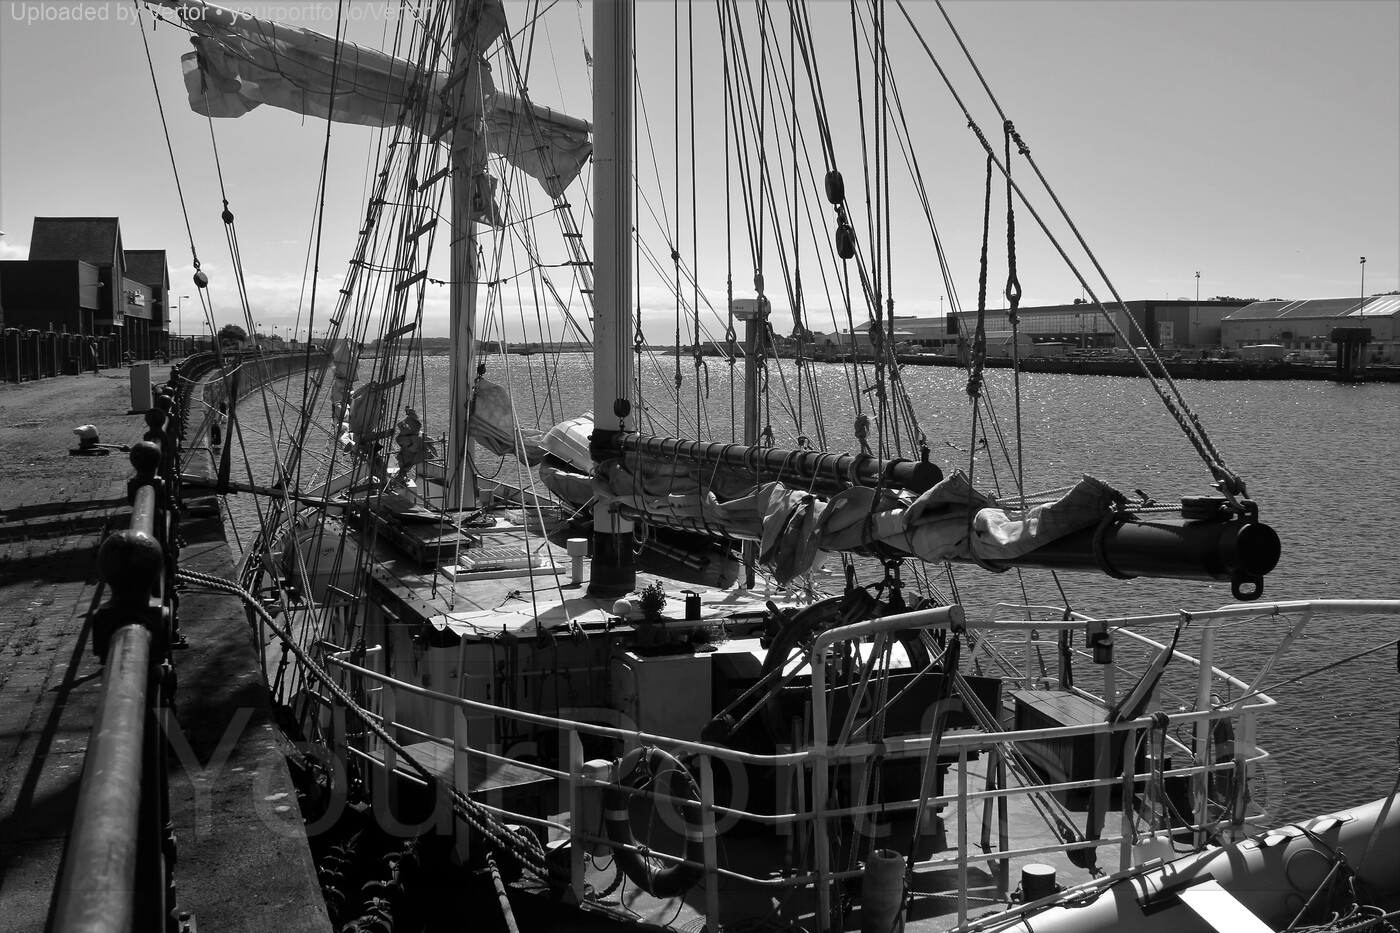 photographer Vertor transport  photo taken at Buccleuch Dock Barrow in Furness